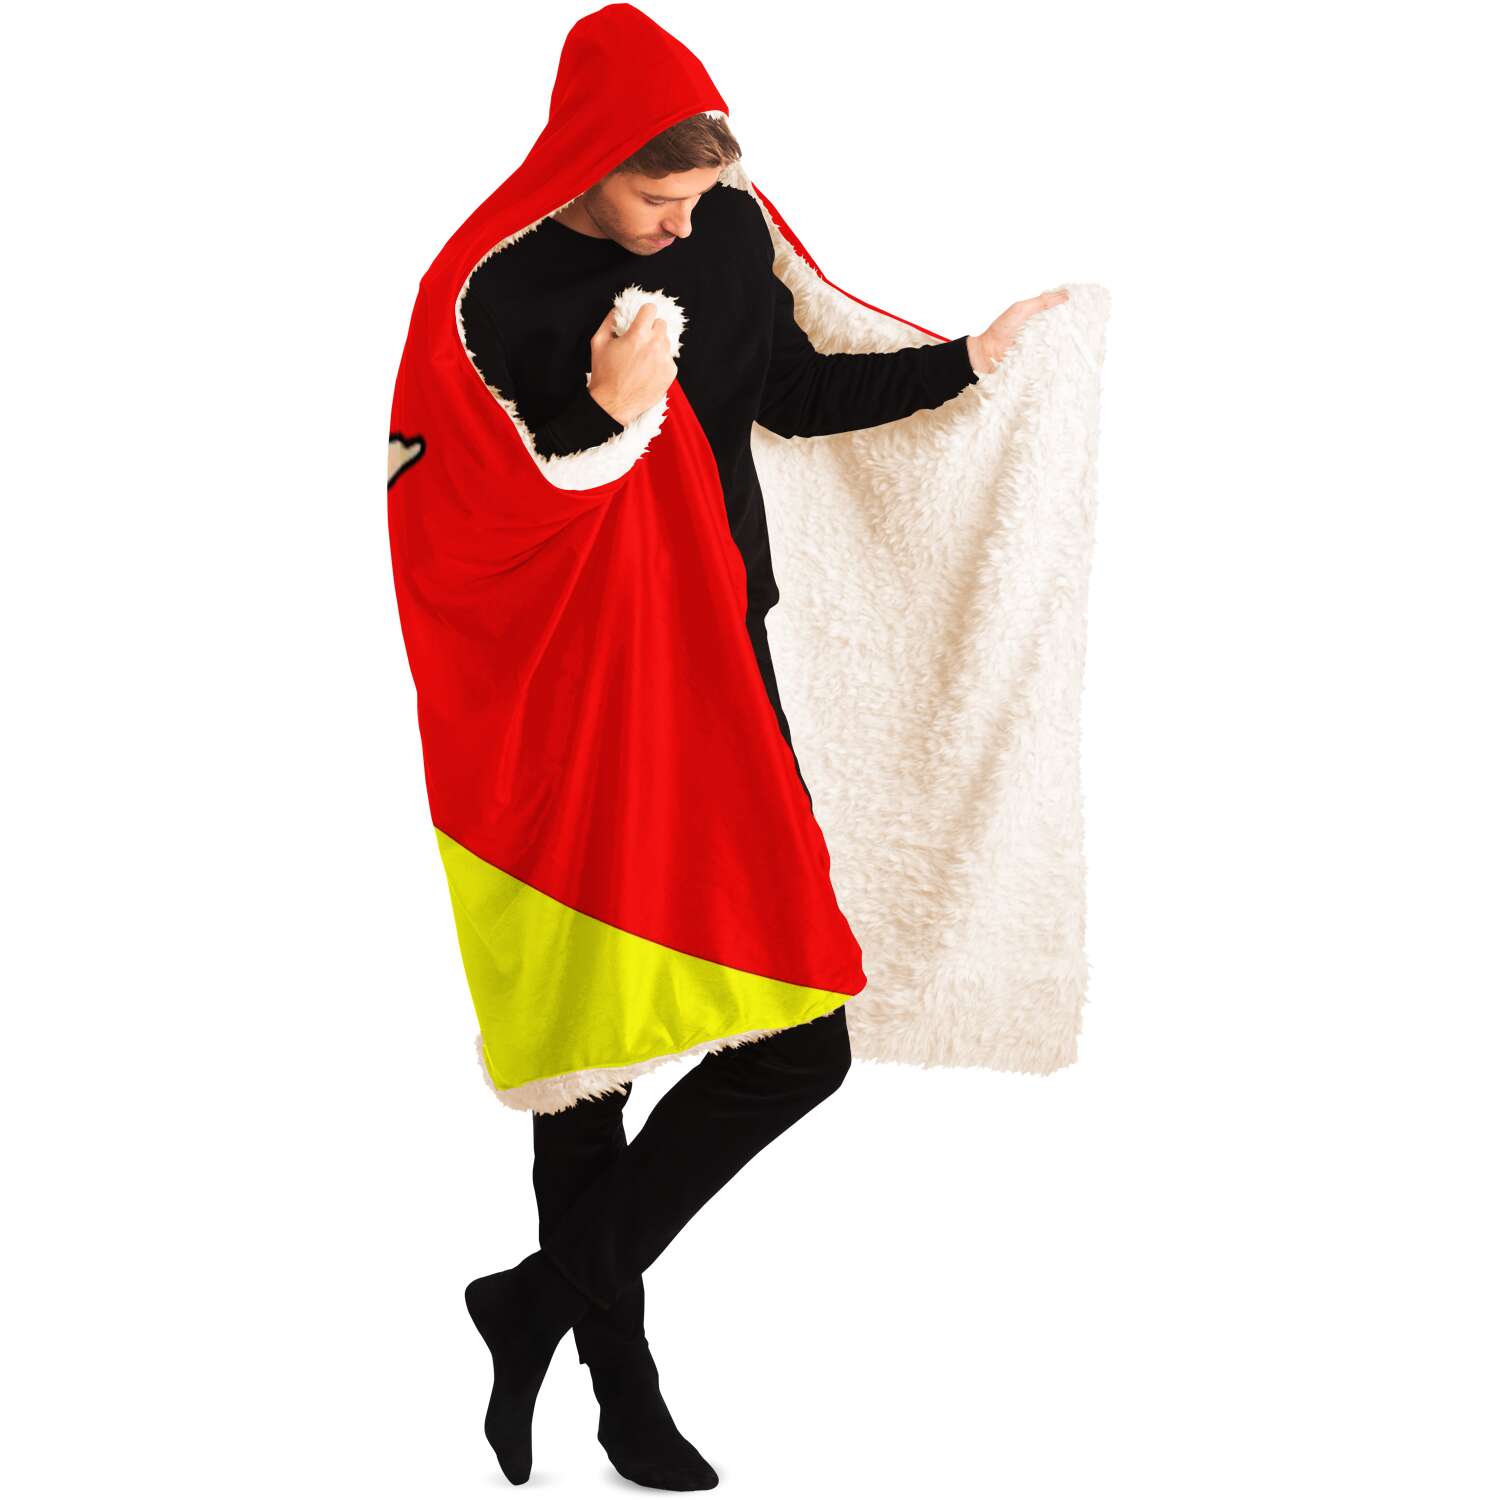 Sicilian Flag Hooded Blanket